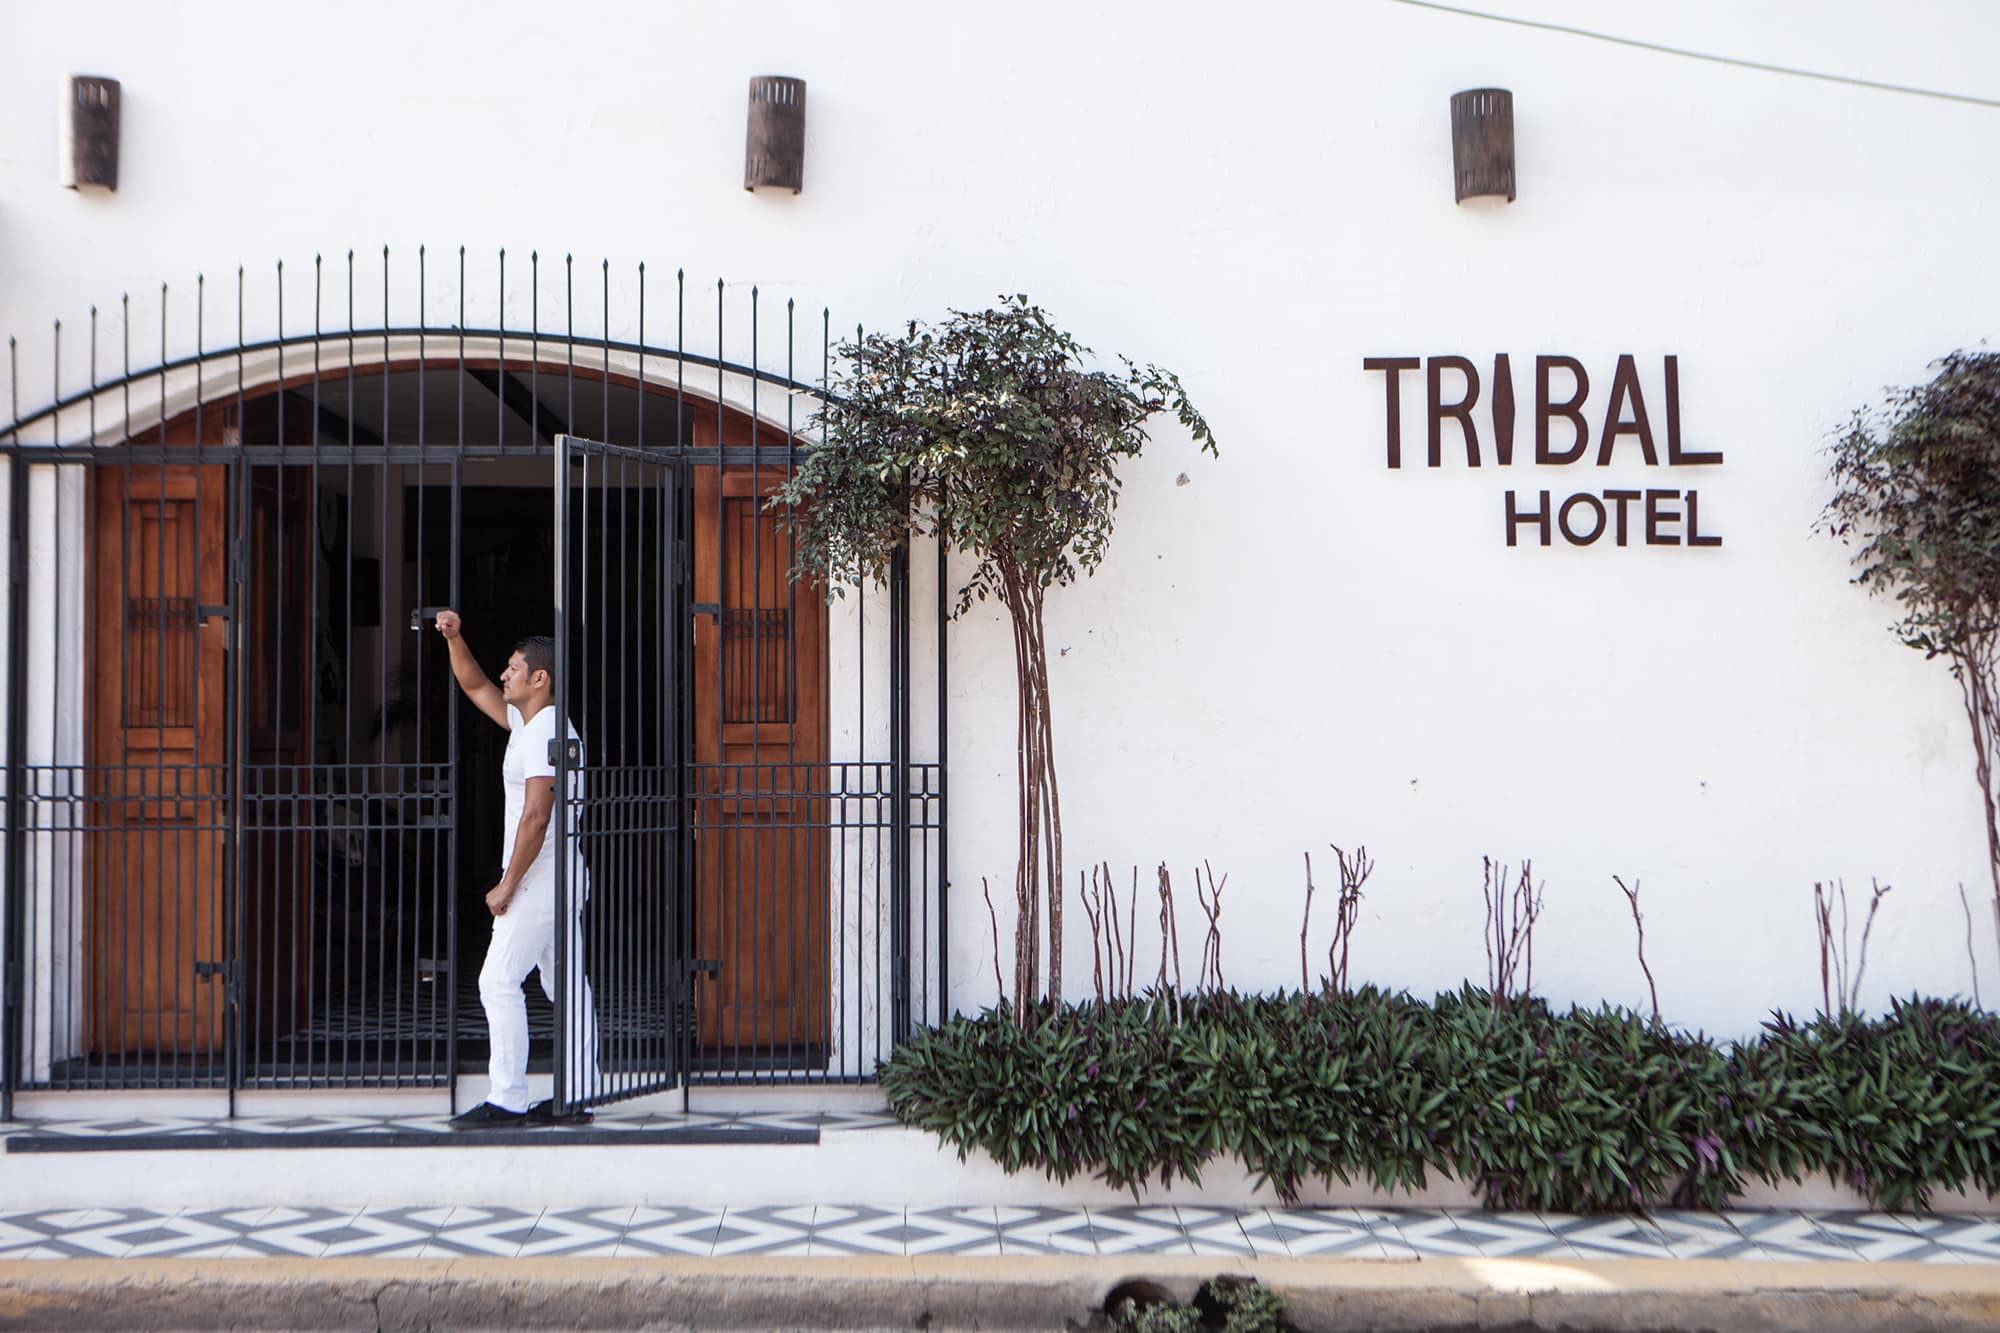 Nicaragua Hotels: The Tribal Hotel